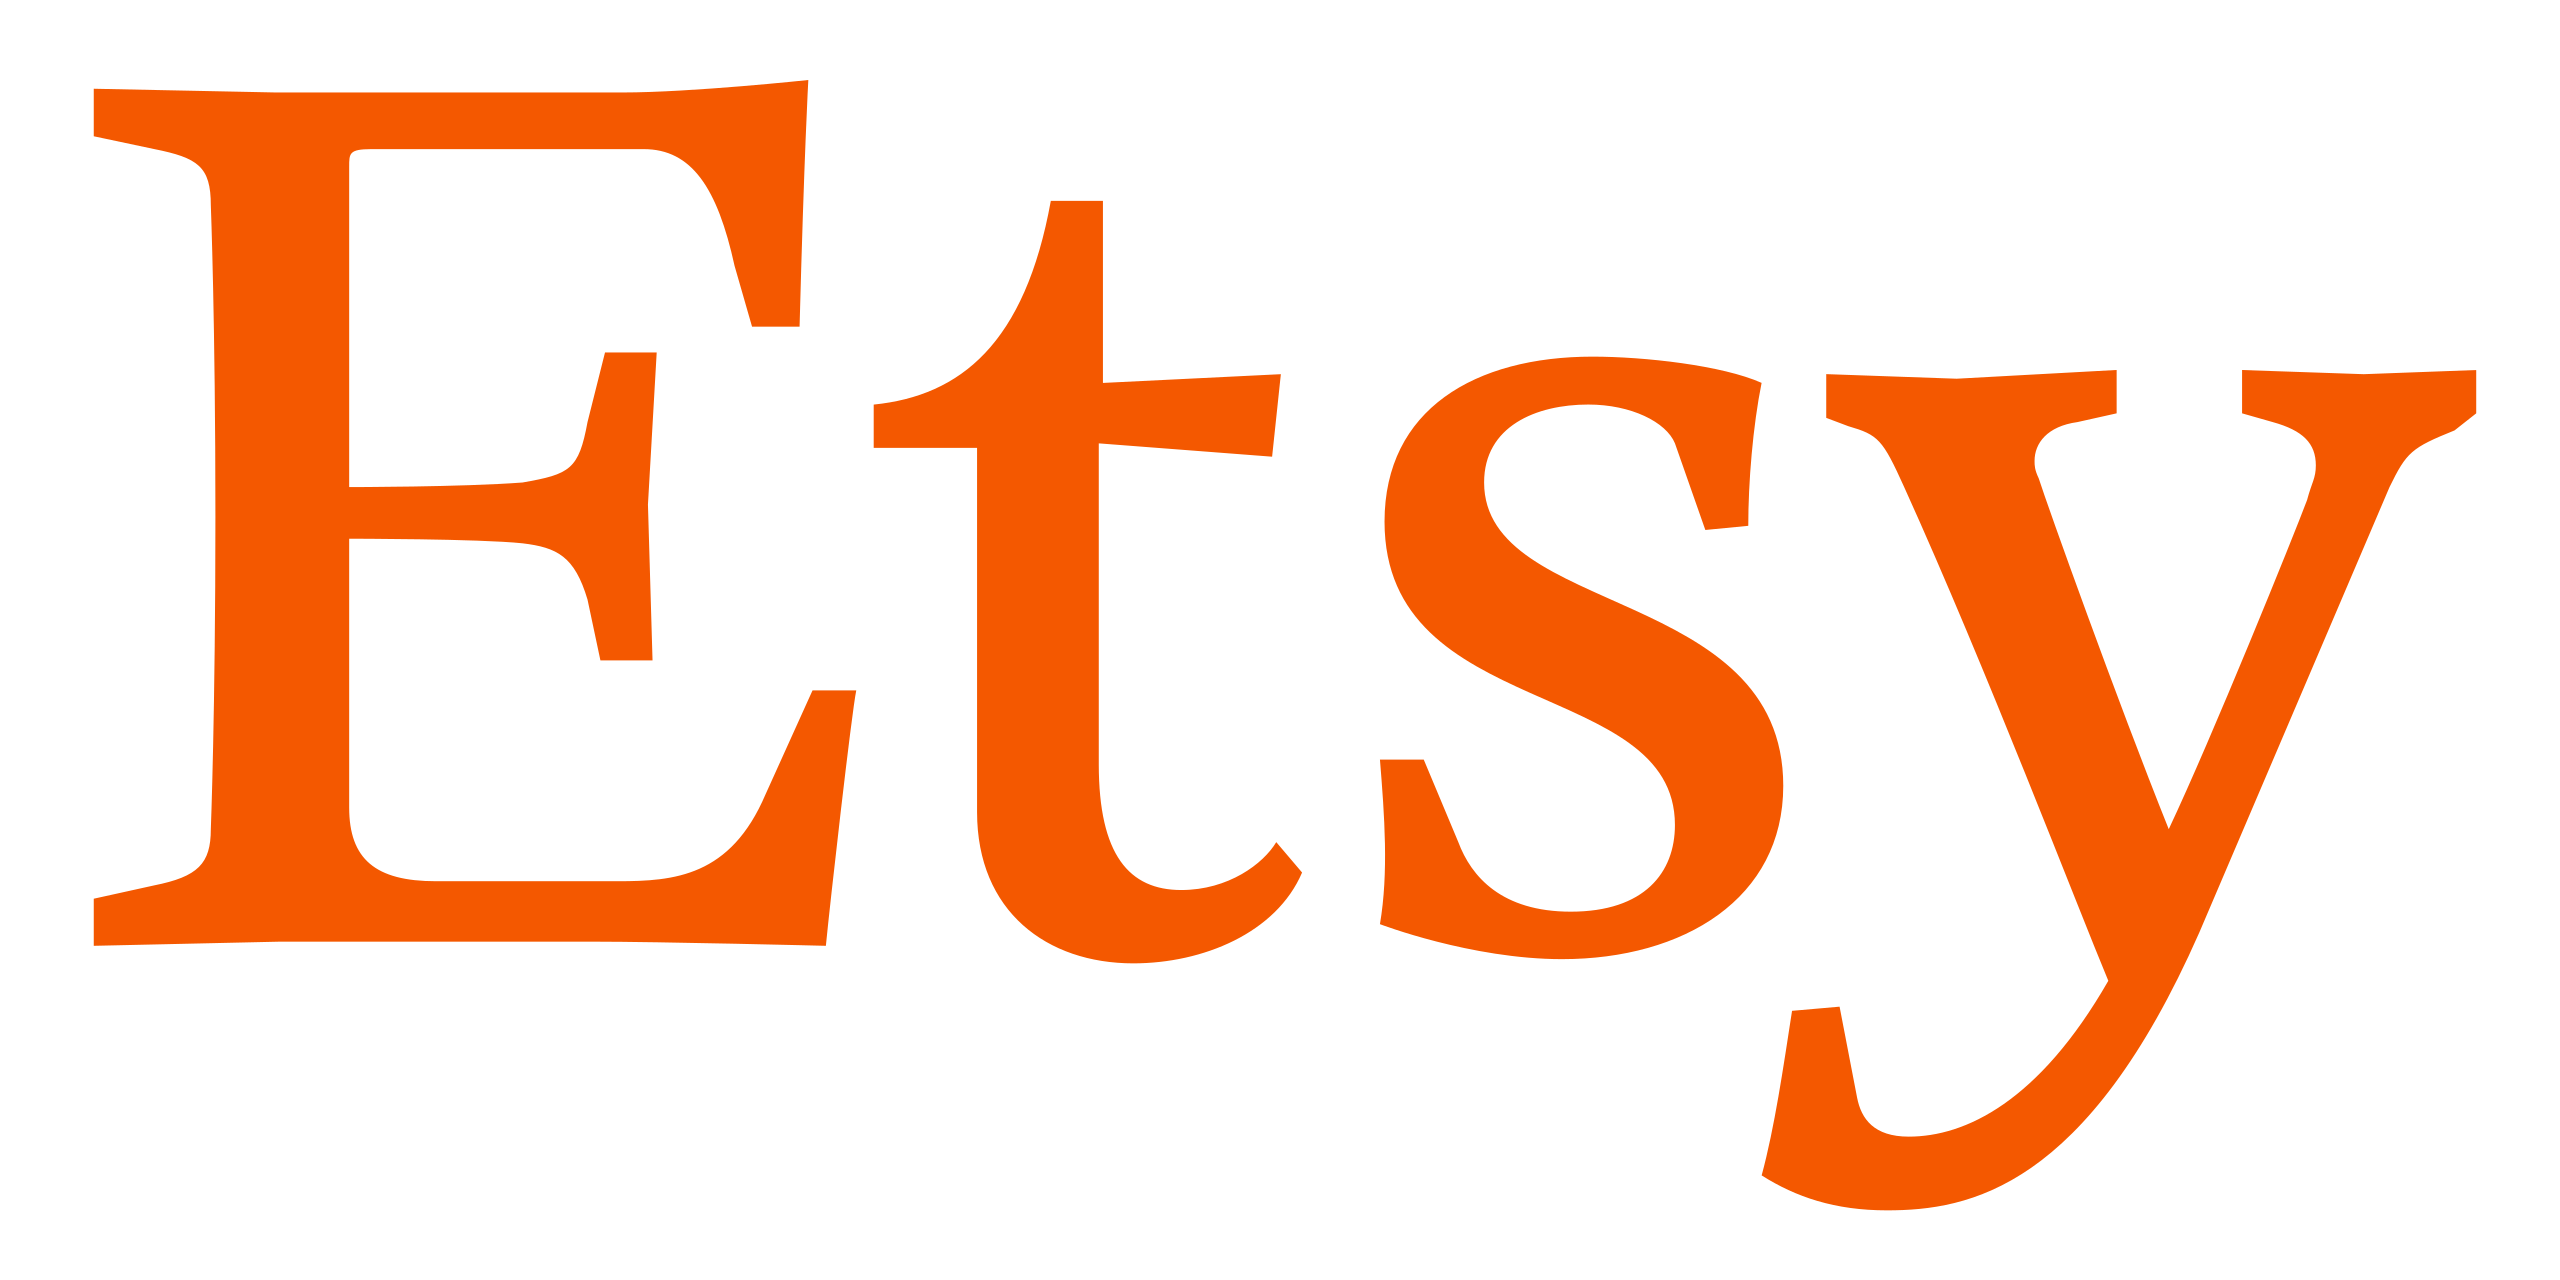 Etsy logo Datali group